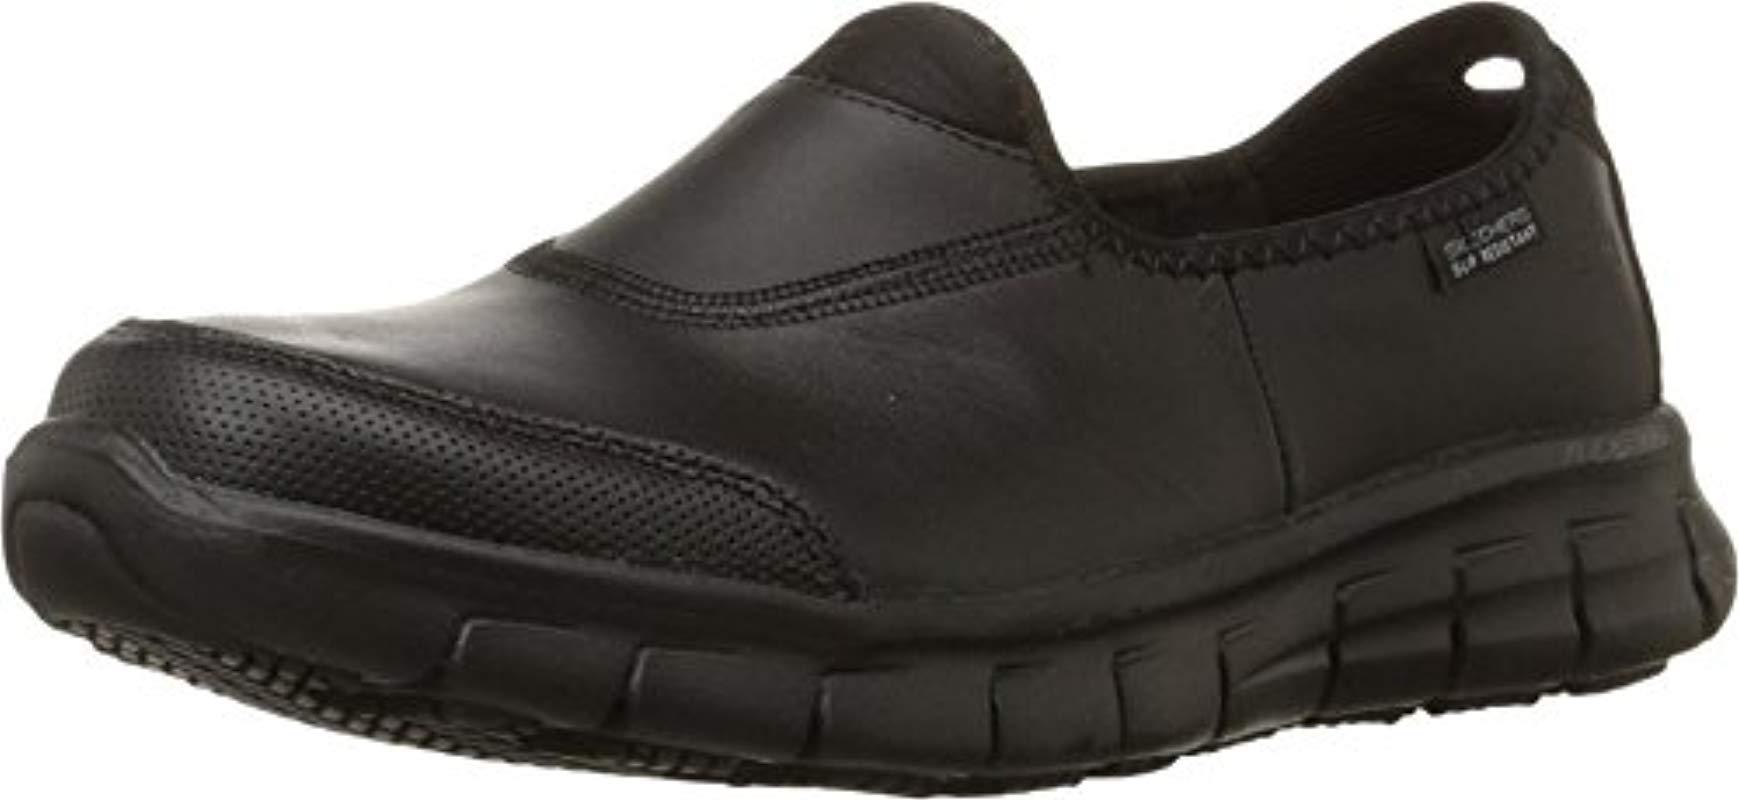 Skechers Leather For Work Sure Track Slip Resistant Shoe, Black, 6 M Us ...